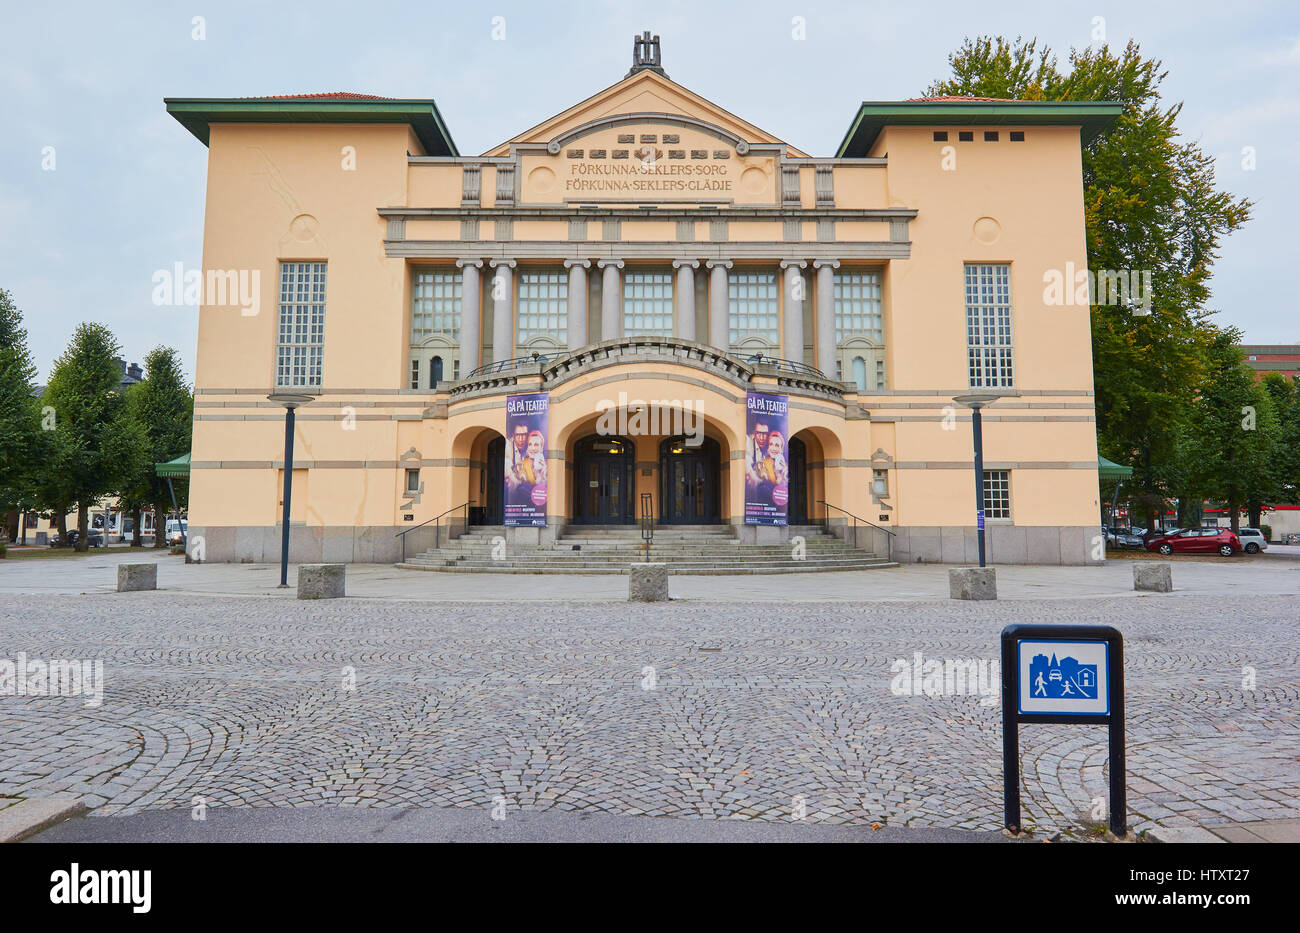 Ostgotateatern Theatre, Norrkoping, Ostergotland, Sweden, Scandinavia Stock Photo